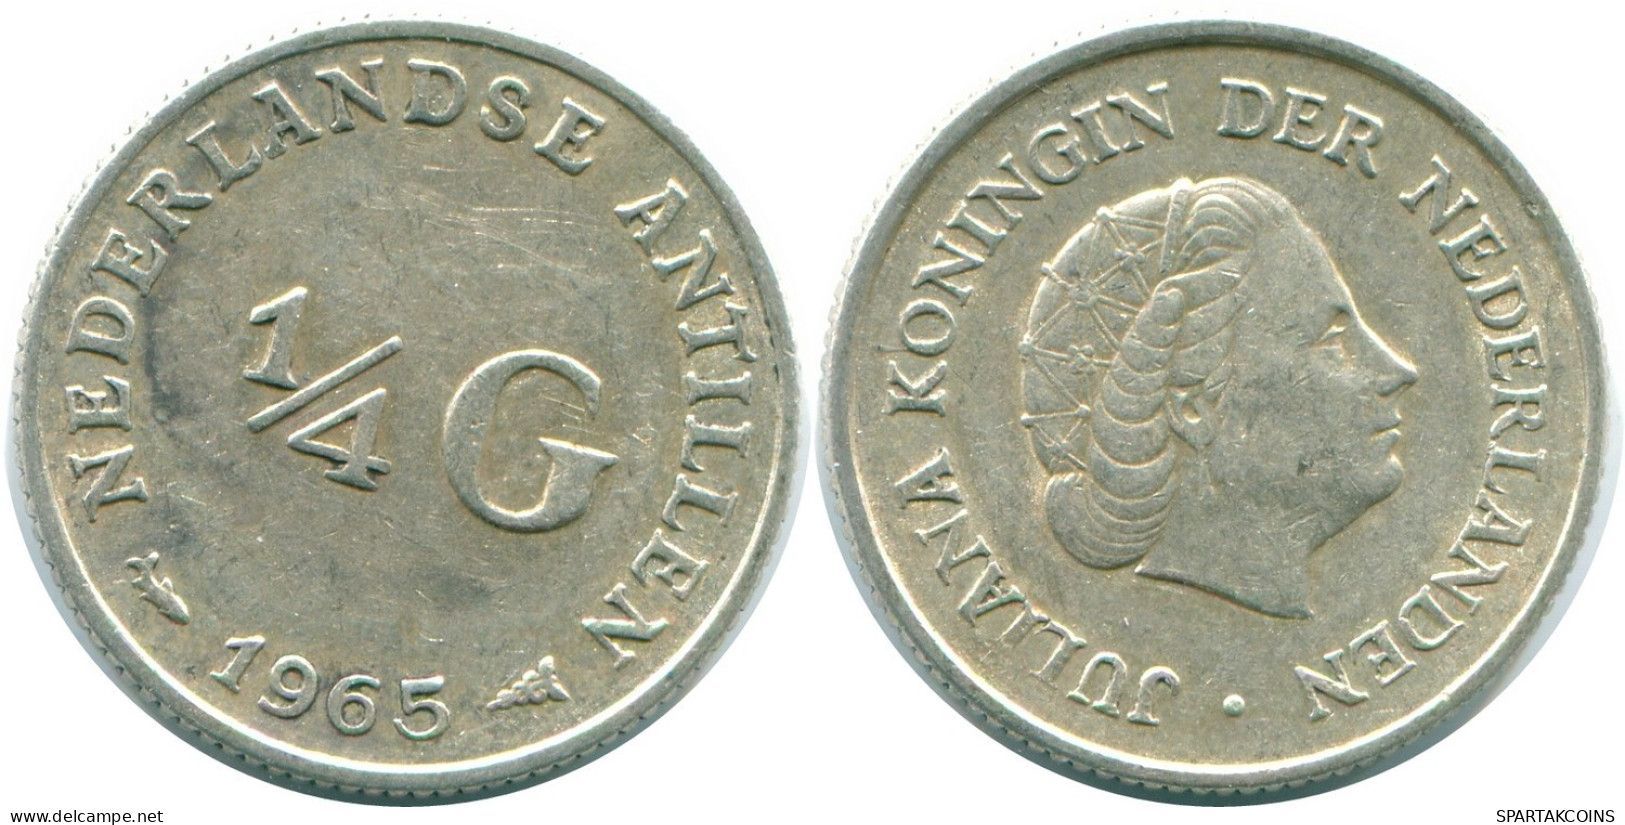 1/4 GULDEN 1965 NETHERLANDS ANTILLES SILVER Colonial Coin #NL11284.4.U.A - Antille Olandesi